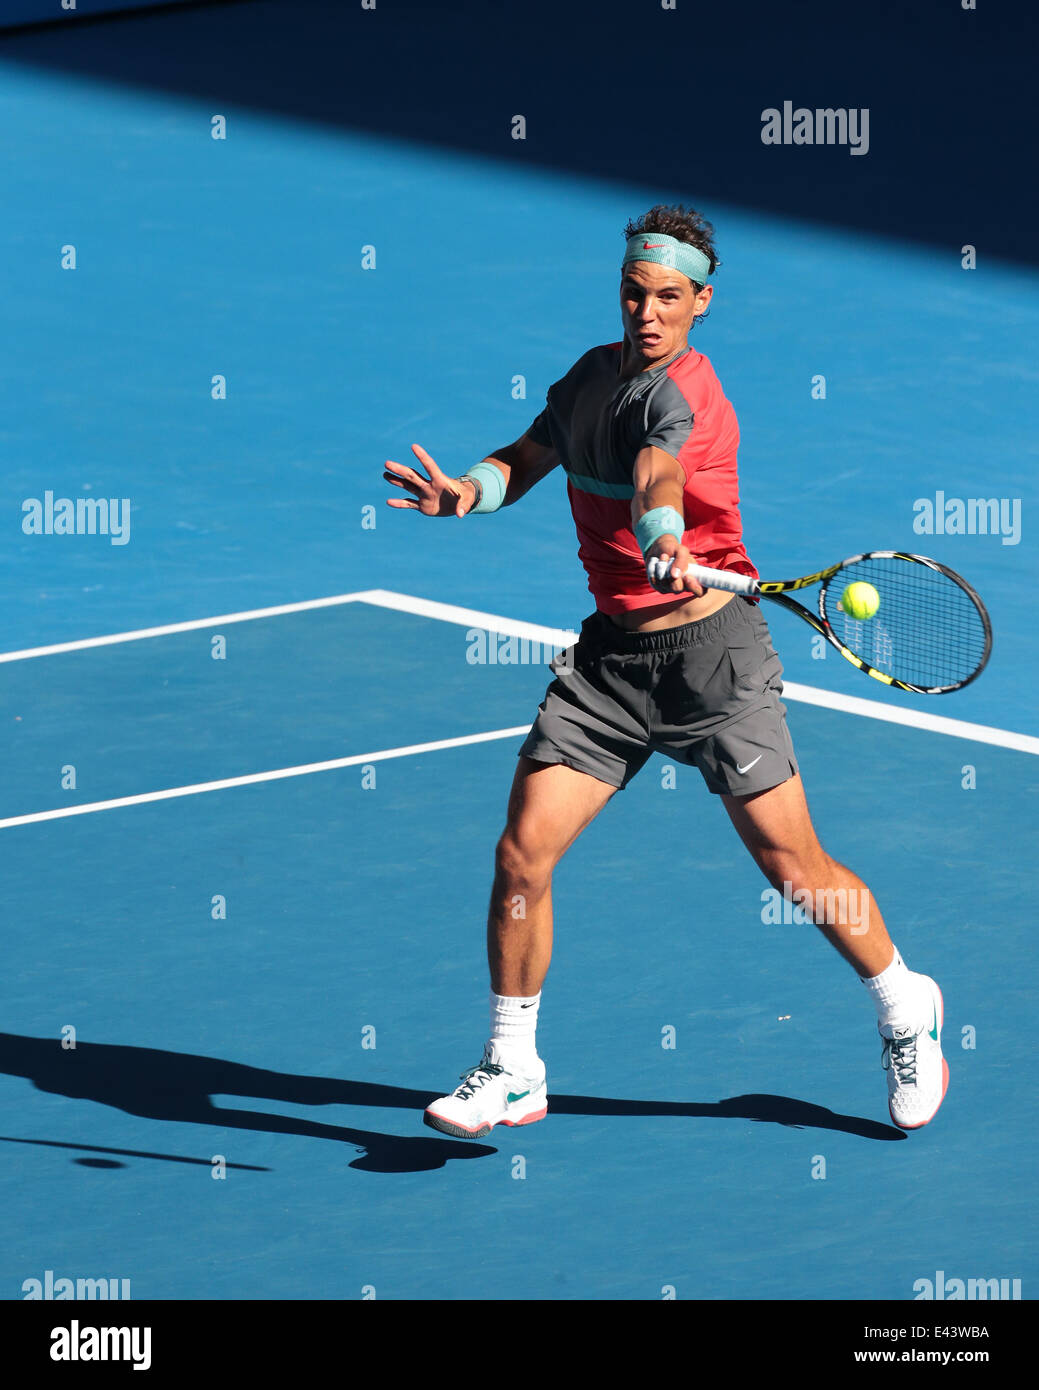 Tennis - Australian Open 2014 Melbourne - Rafael Nadal vs. Grigor Dimitrov - Laver Arena Featuring: Rafael Nadal Where: Melbourne, Australia When: 22 Jan 2014 Stock Photo -